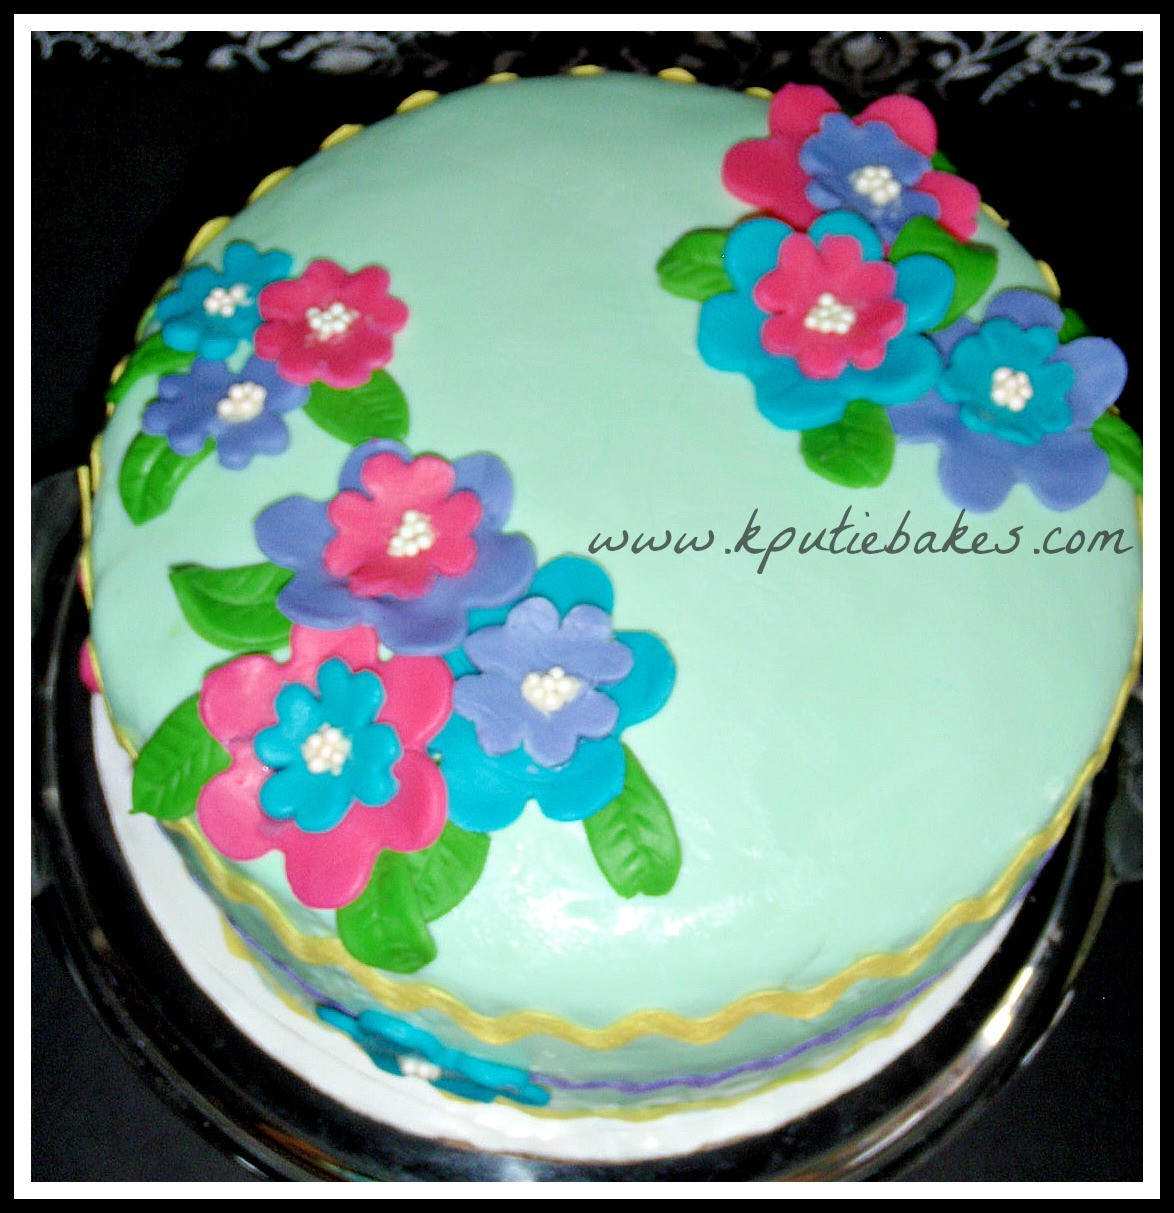 Best ideas about Happy Birthday Karen Cake
. Save or Pin KputieBakes Vintage Inspired Birthday Cake Now.